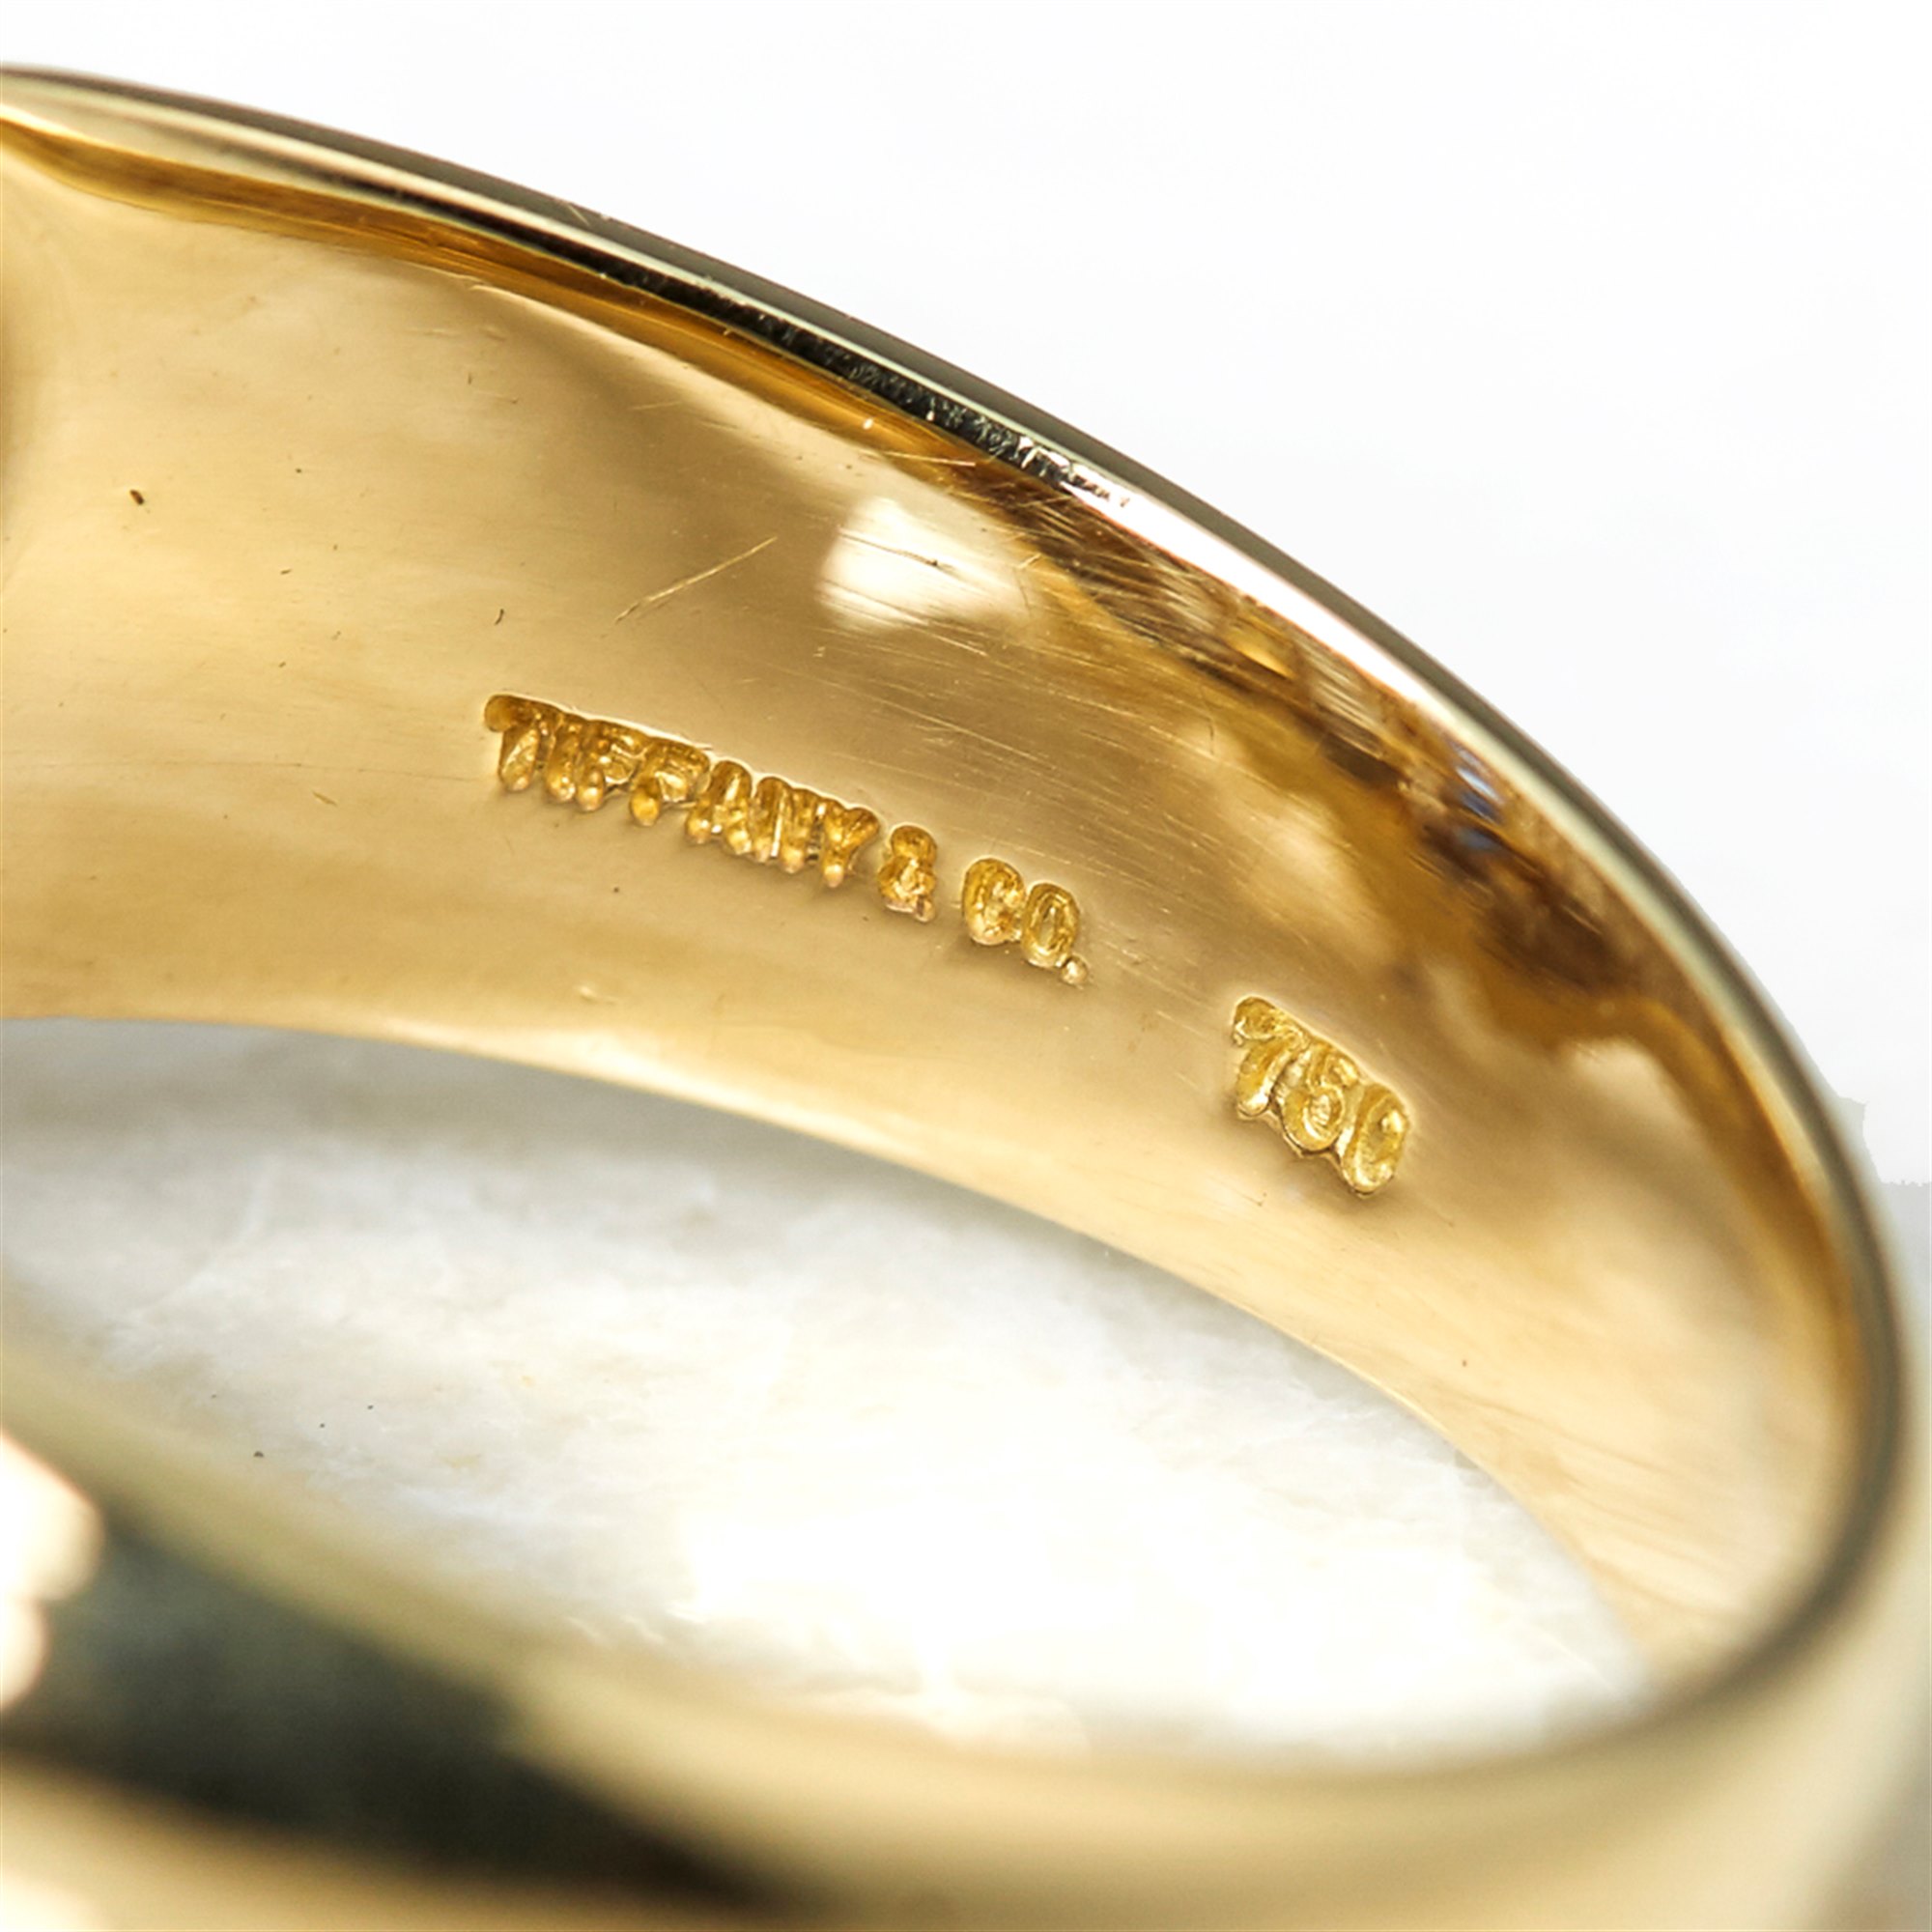 Tiffany & Co. 18k Yellow Gold Sapphire & Diamond Vintage Ring